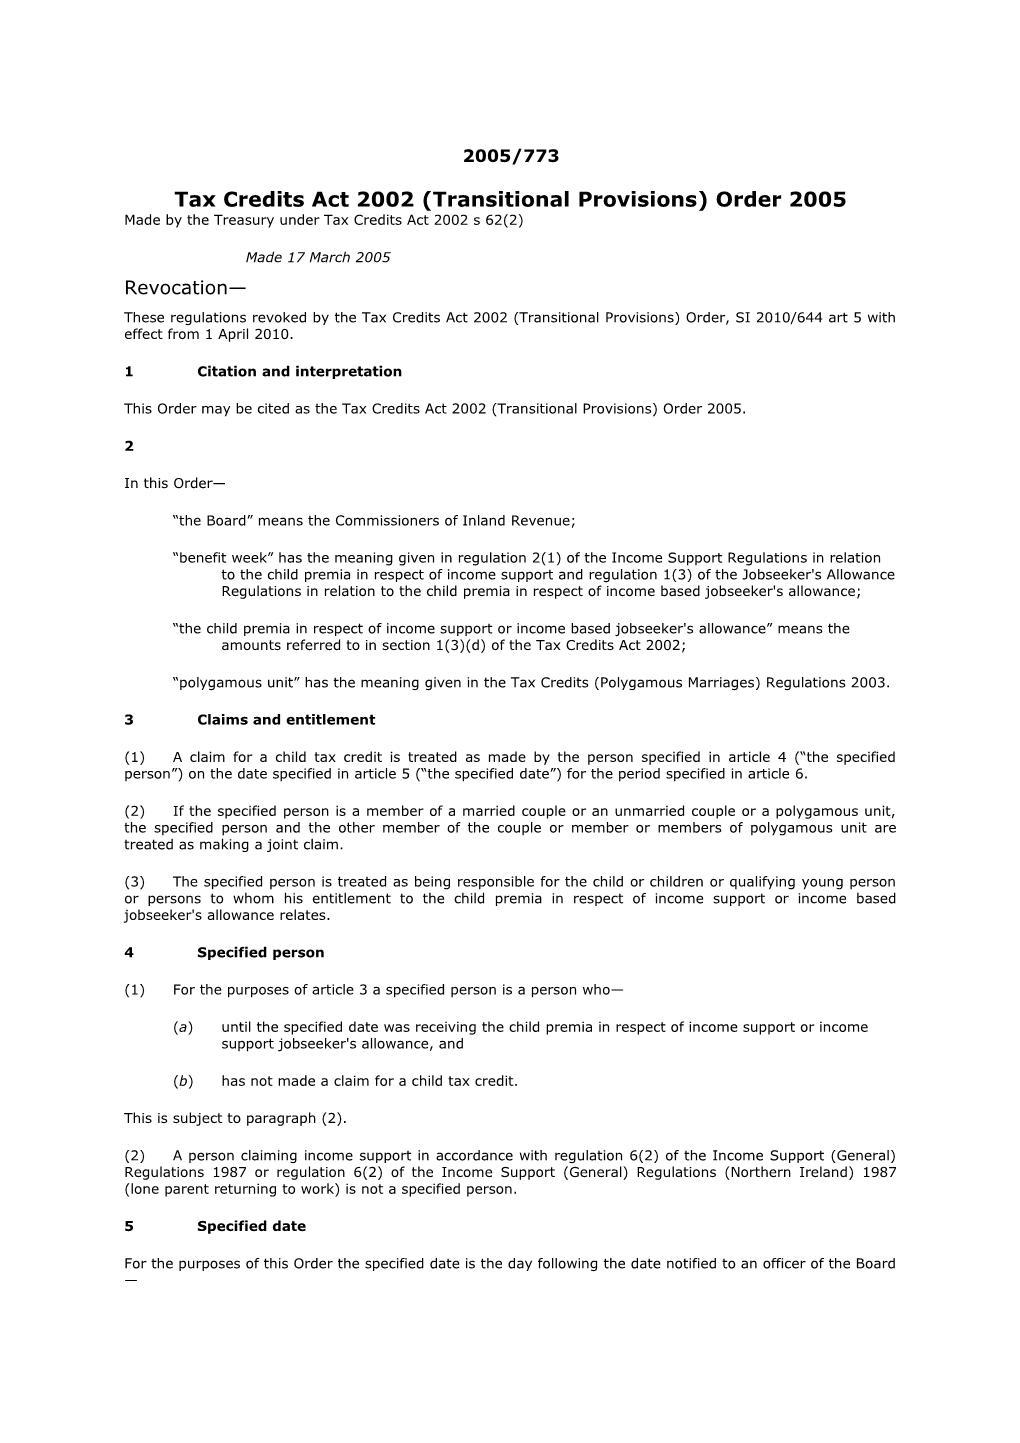 Tax Credits Act 2002 (Transitional Provisions) Order 2005